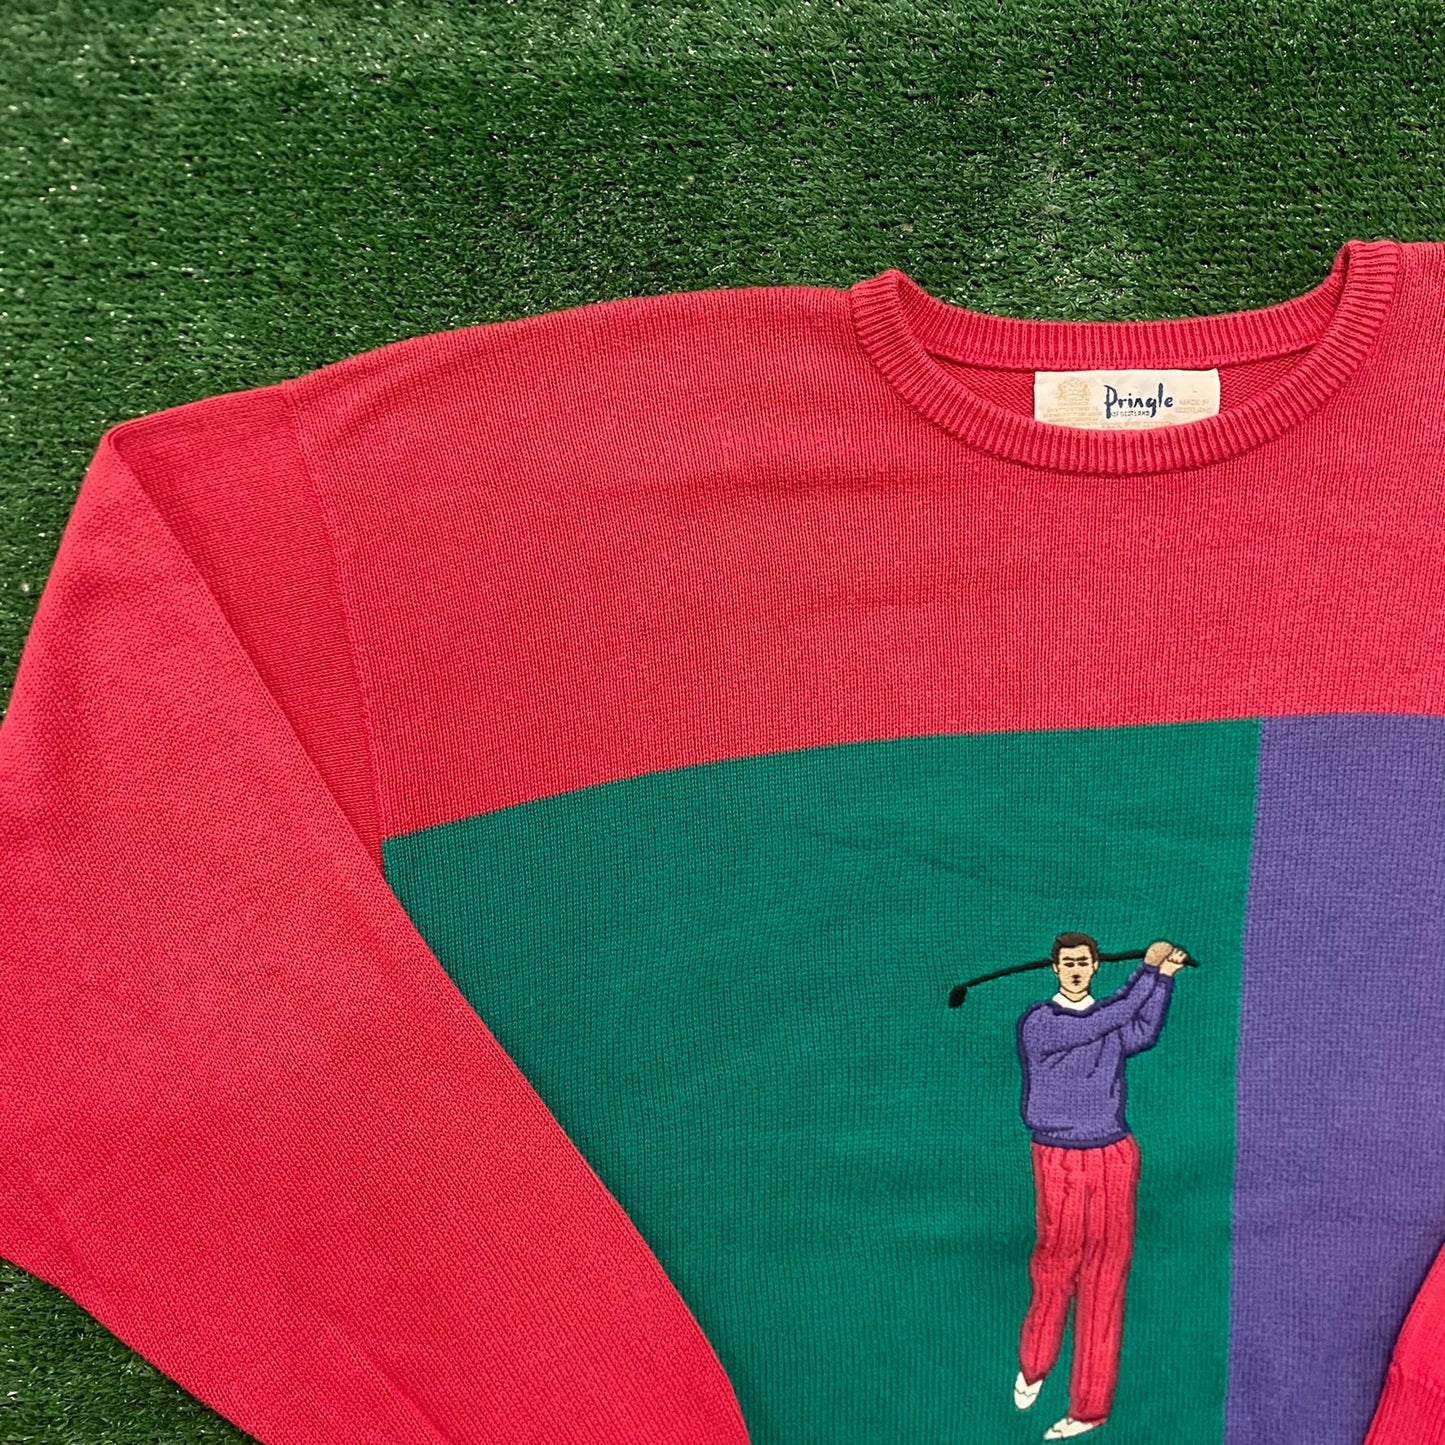 Vintage 80s Golf Color Block Preppy Knit Crewneck Sweater